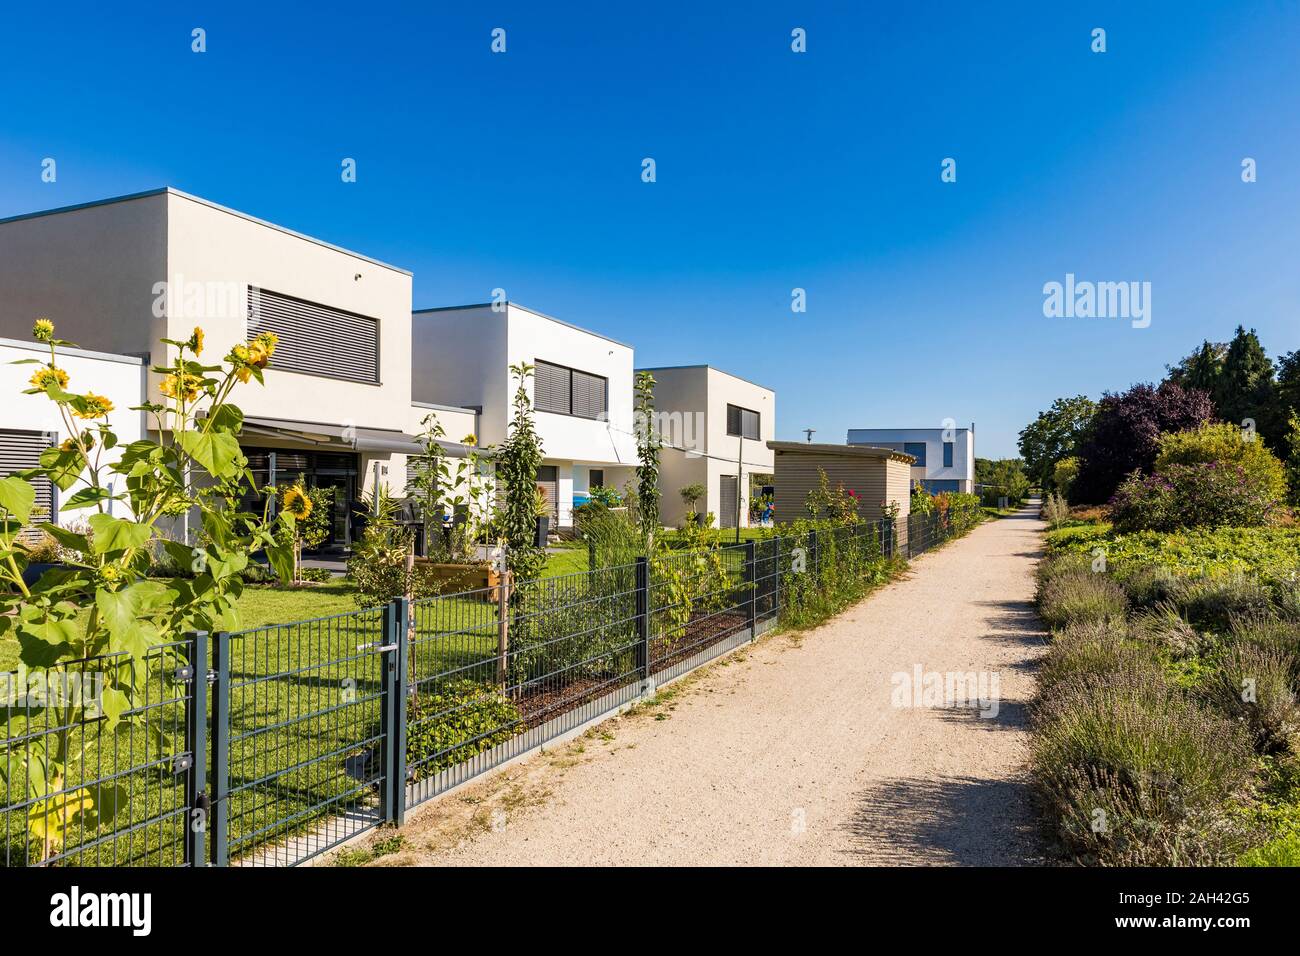 Germany, Bavaria, Neu-Ulm, Dirt road along row of suburb houses Stock Photo